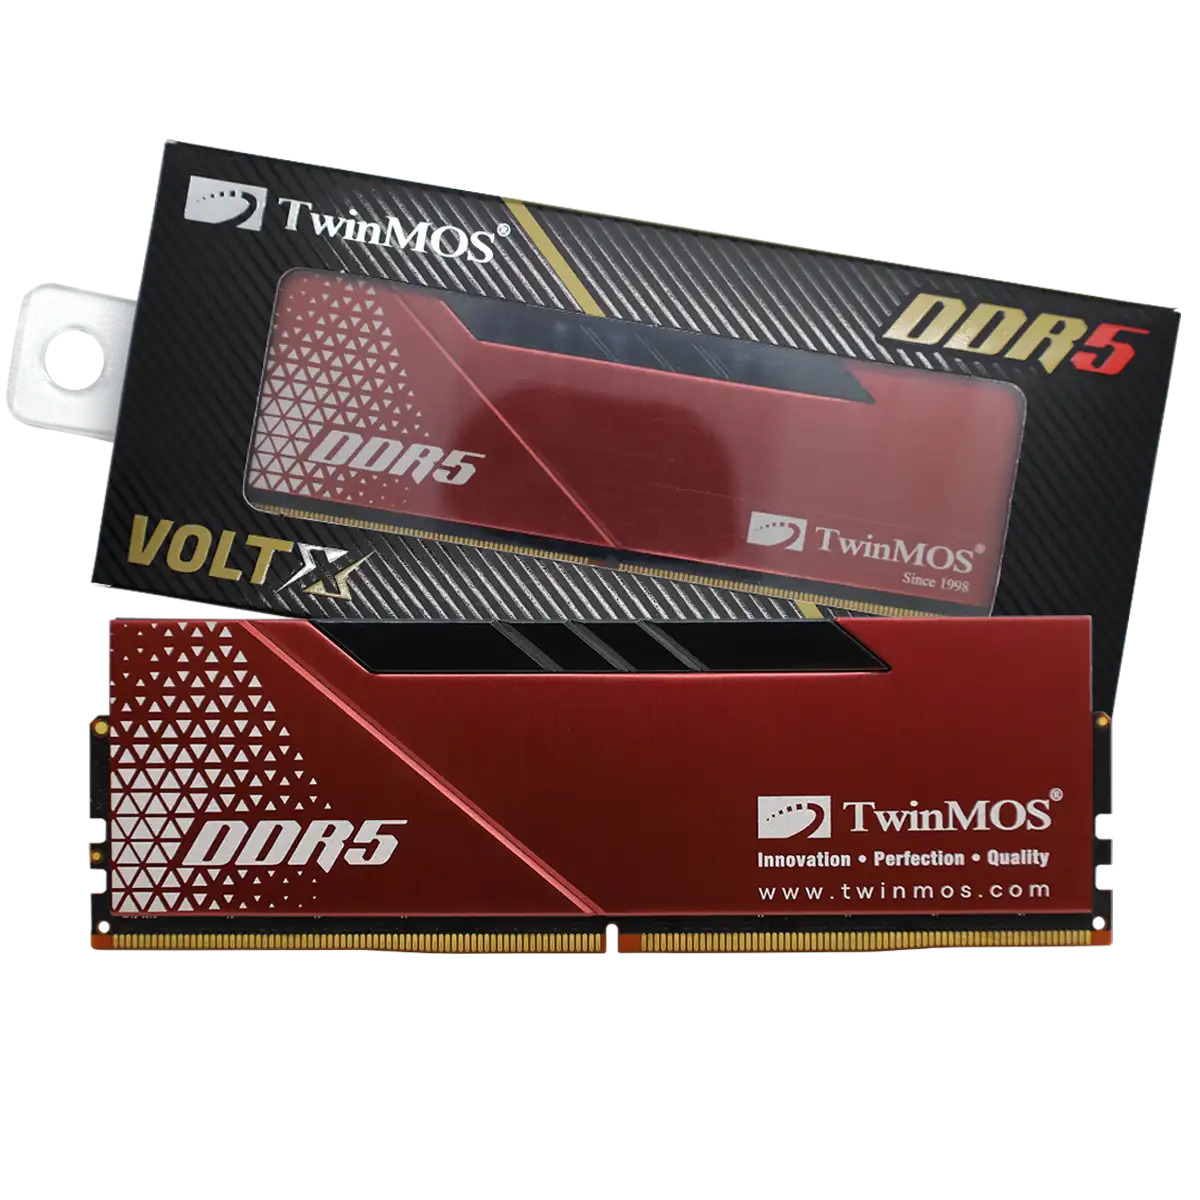 Twinmos VOLTX 16GB	